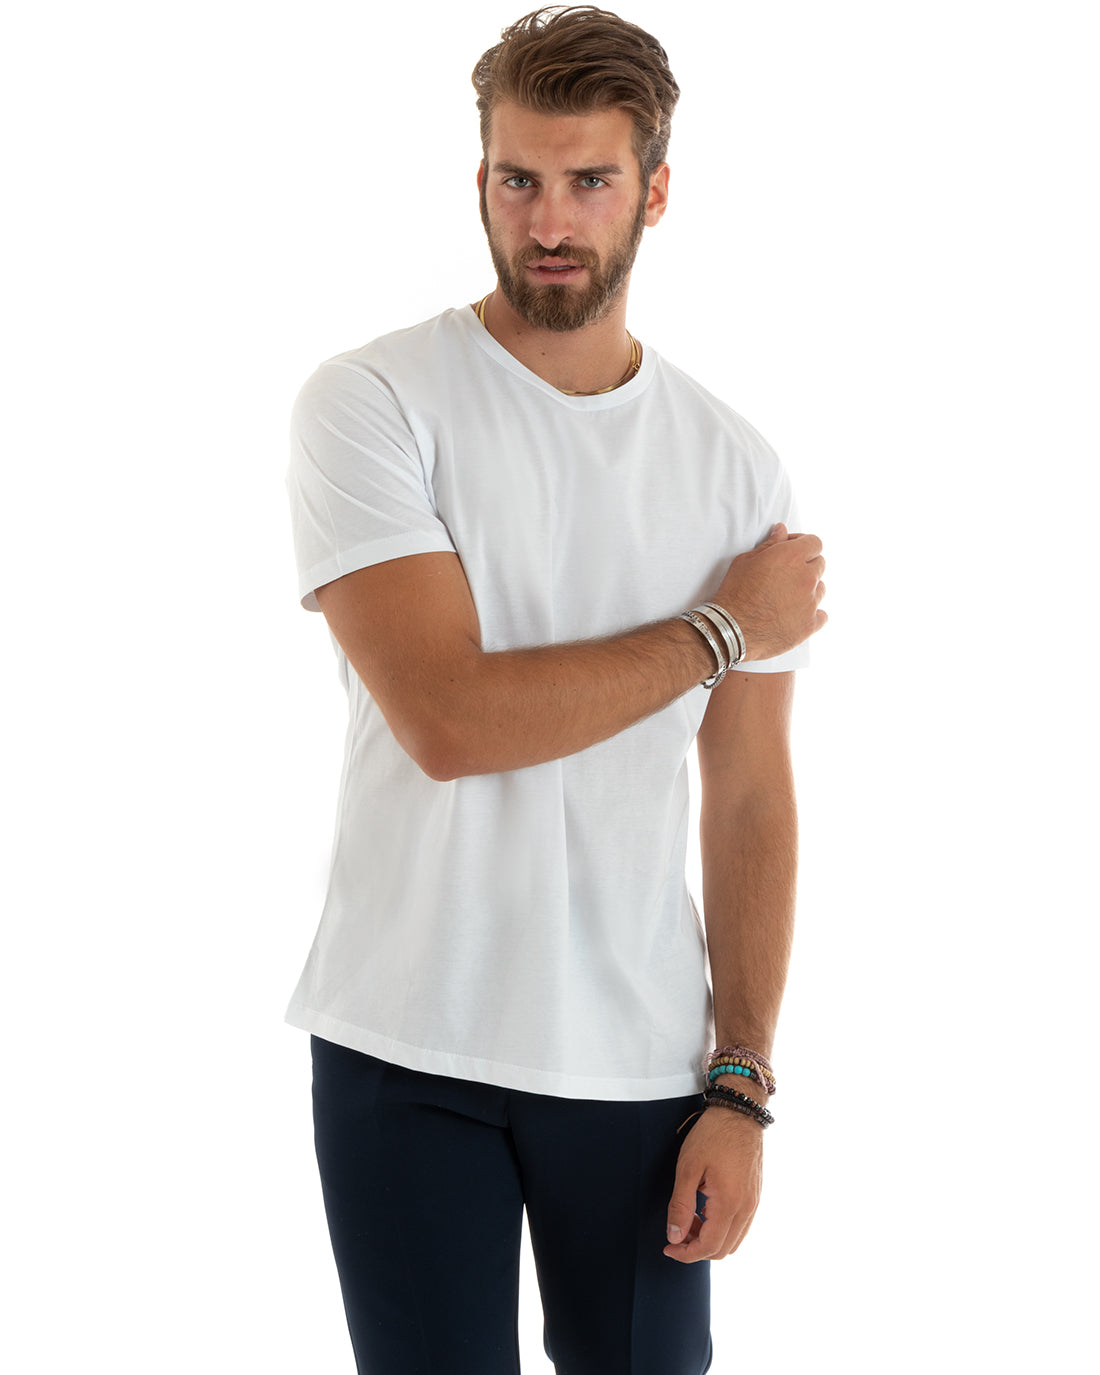 T-shirt Uomo Filo Di Scozia Basic Leggera Tinta Unita Bianco Girocollo Casual GIOSAL-TS2976A